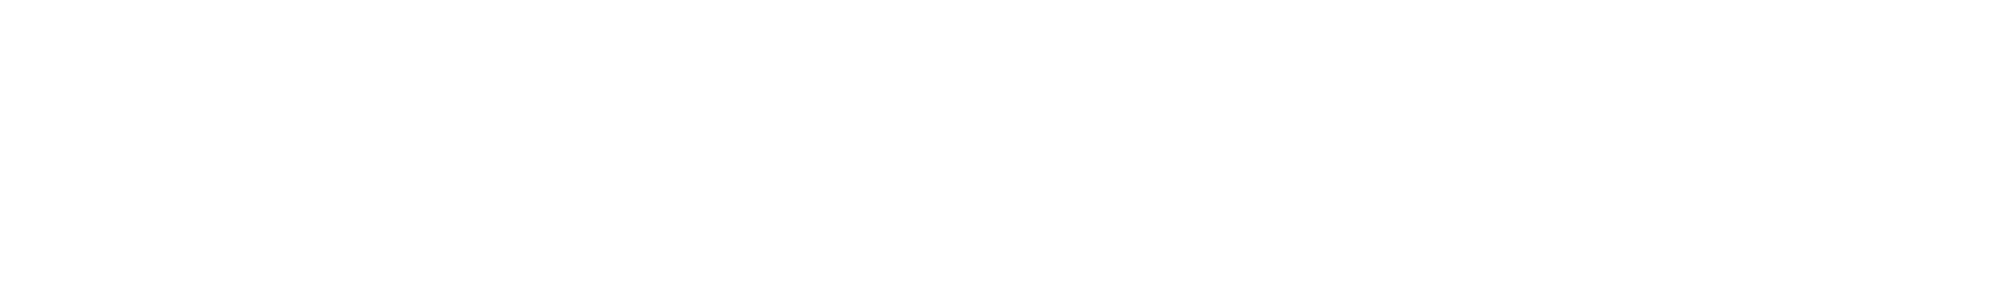 Miller Mayer logo